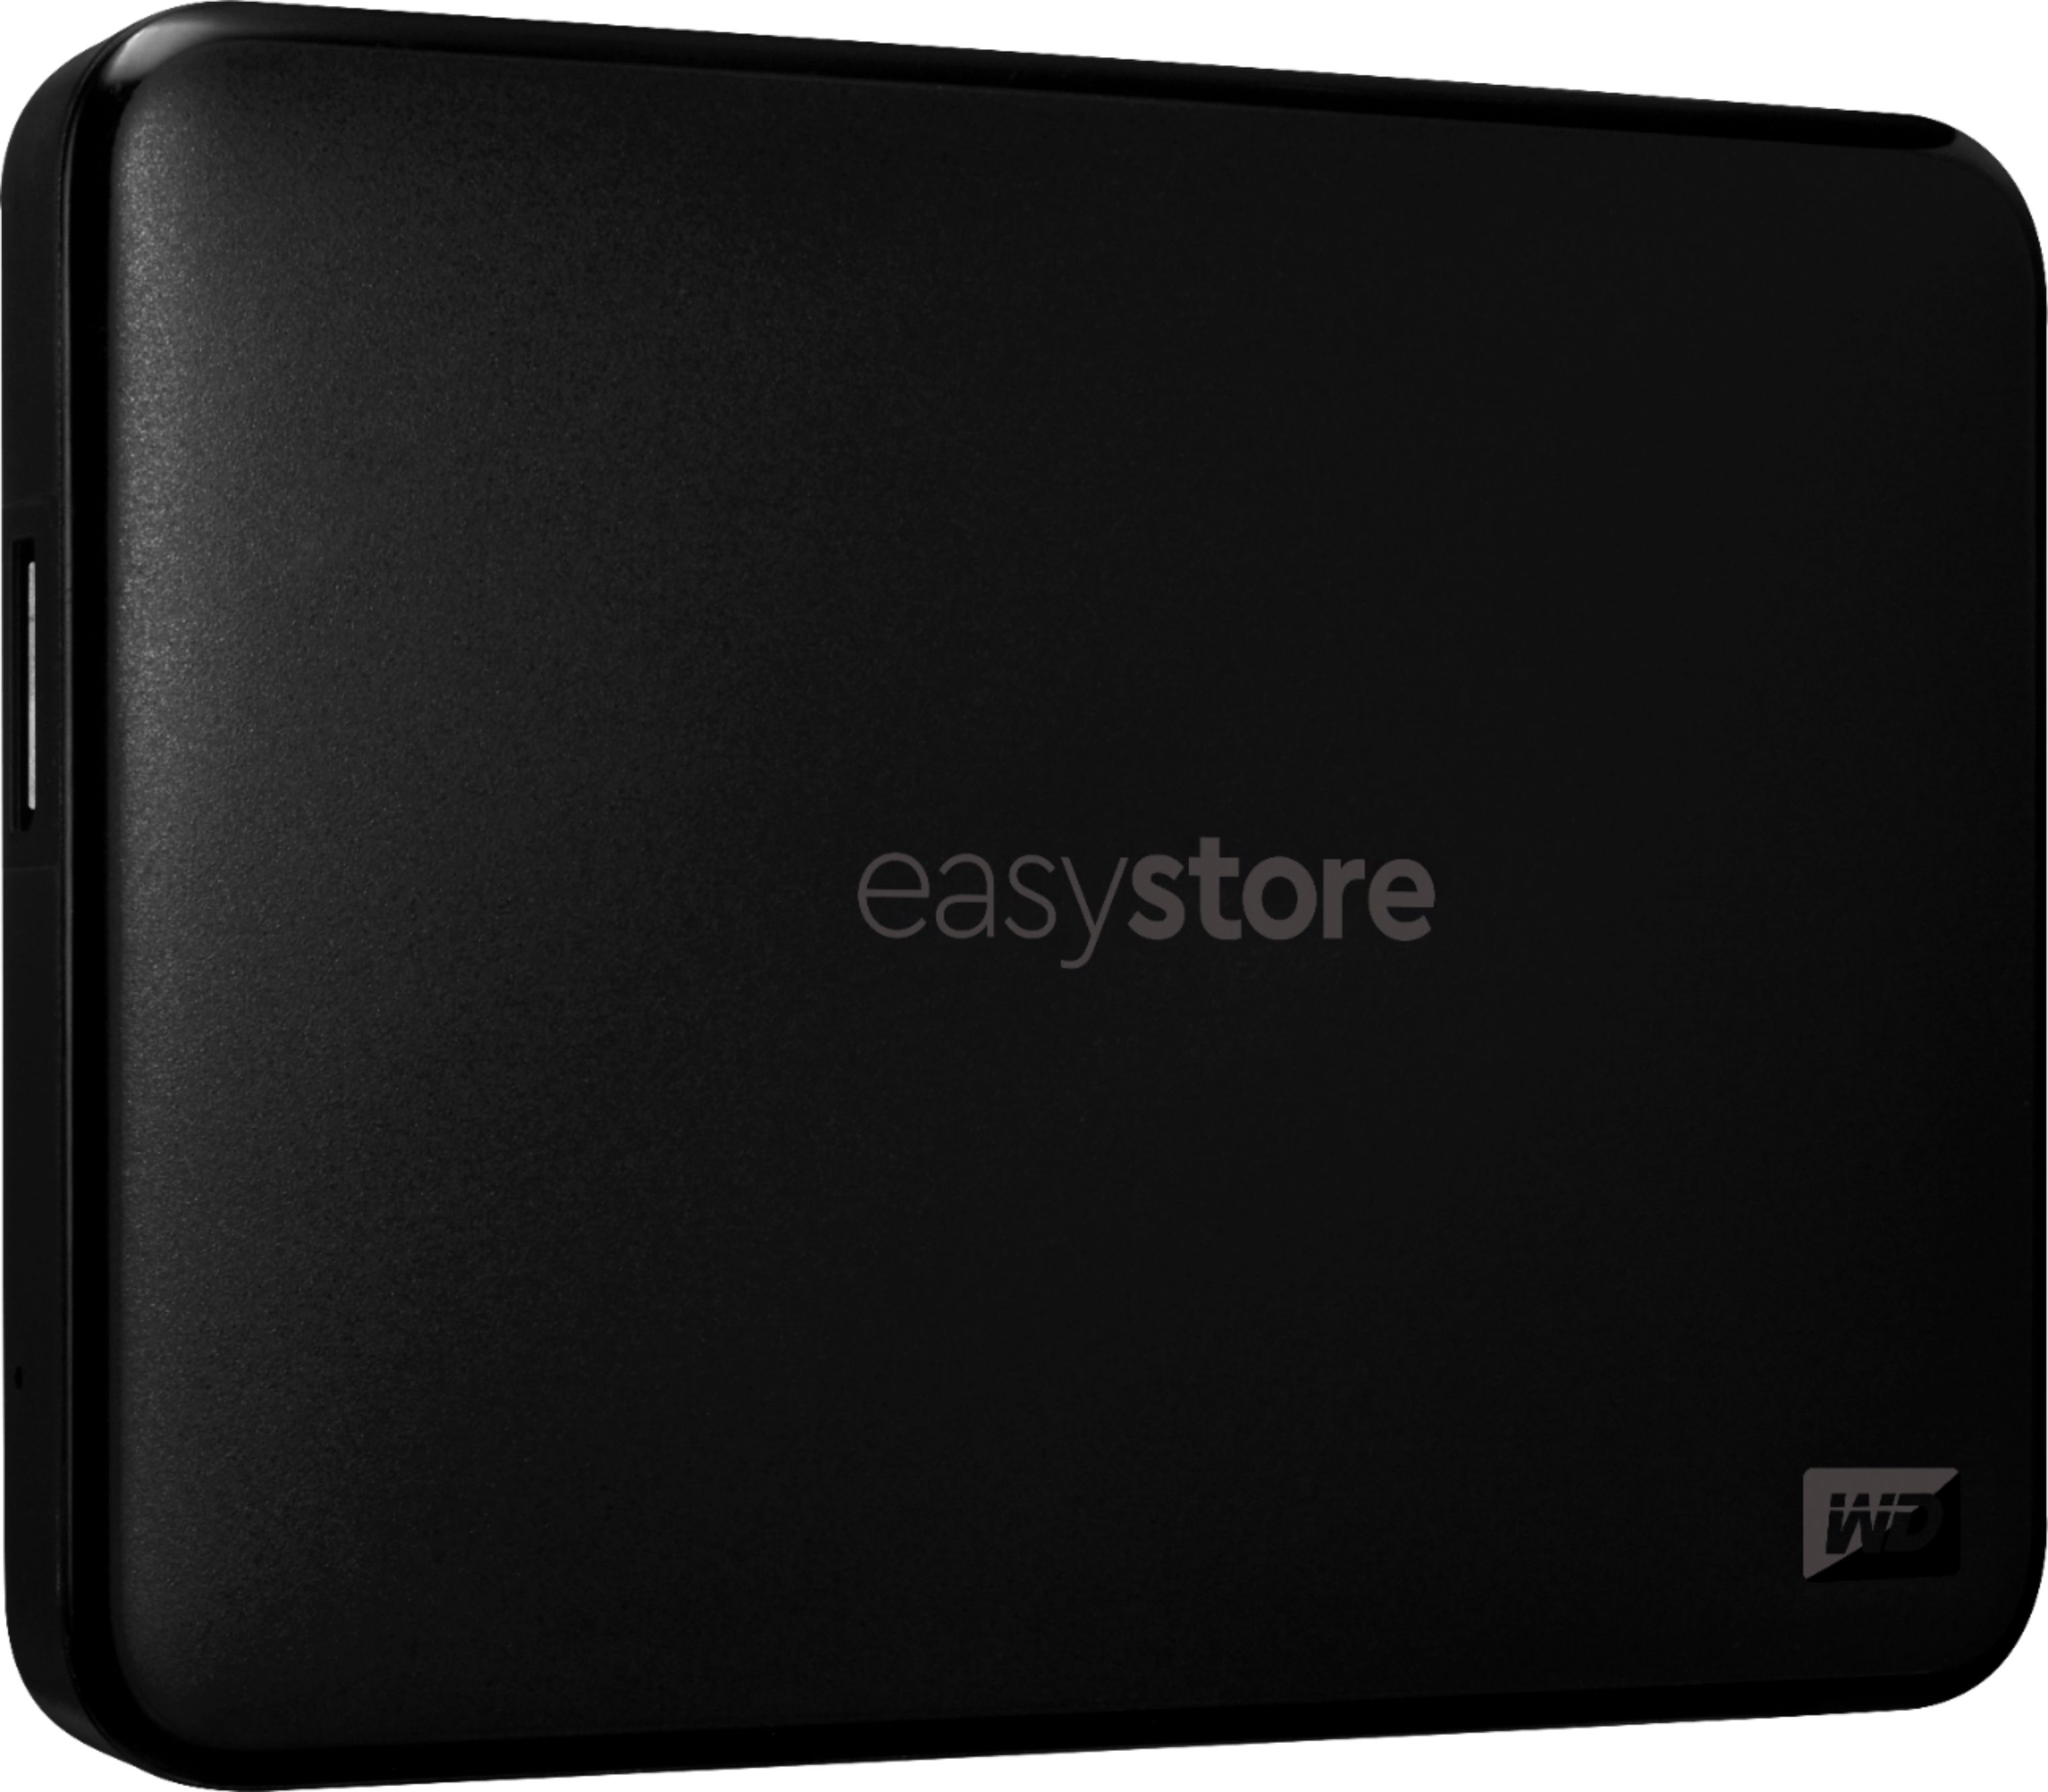 WD Easystore 1TB External USB 3.0 Portable Hard Drive Black  WDBAJN0010BBK-WESN - Best Buy